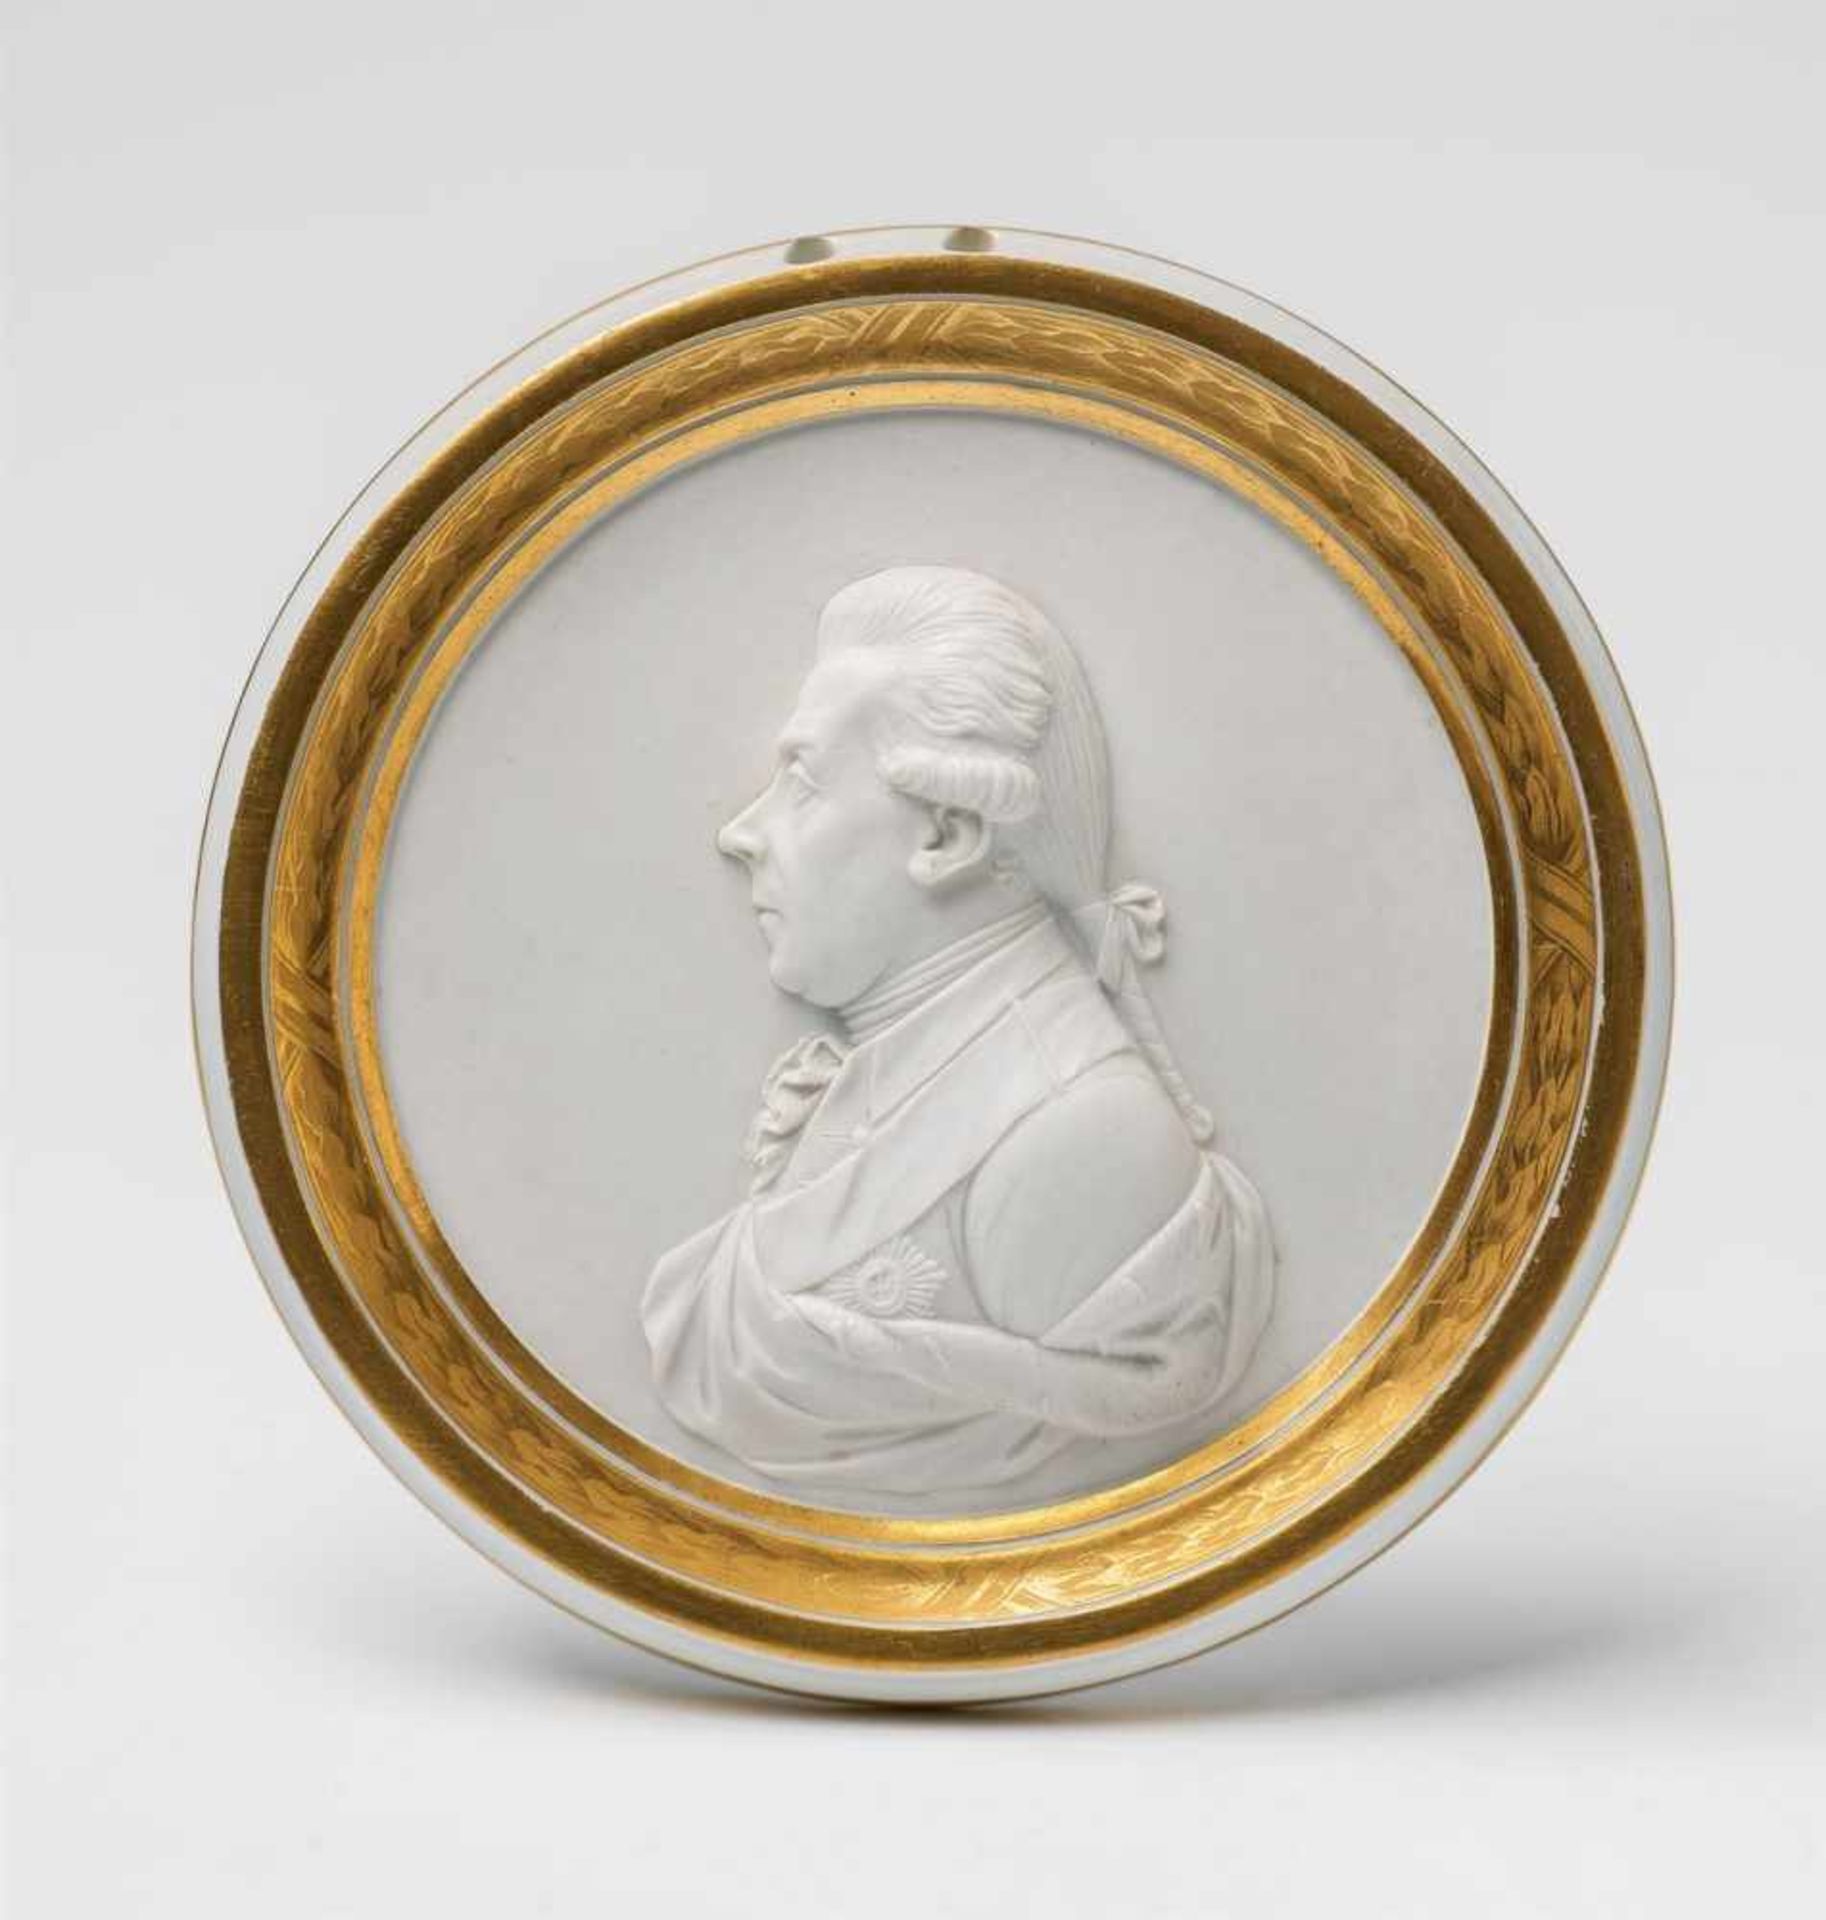 A rare Berlin KPM porcelain plaque with a portrait of Prince Heinrich of PrussiaPortrait of the